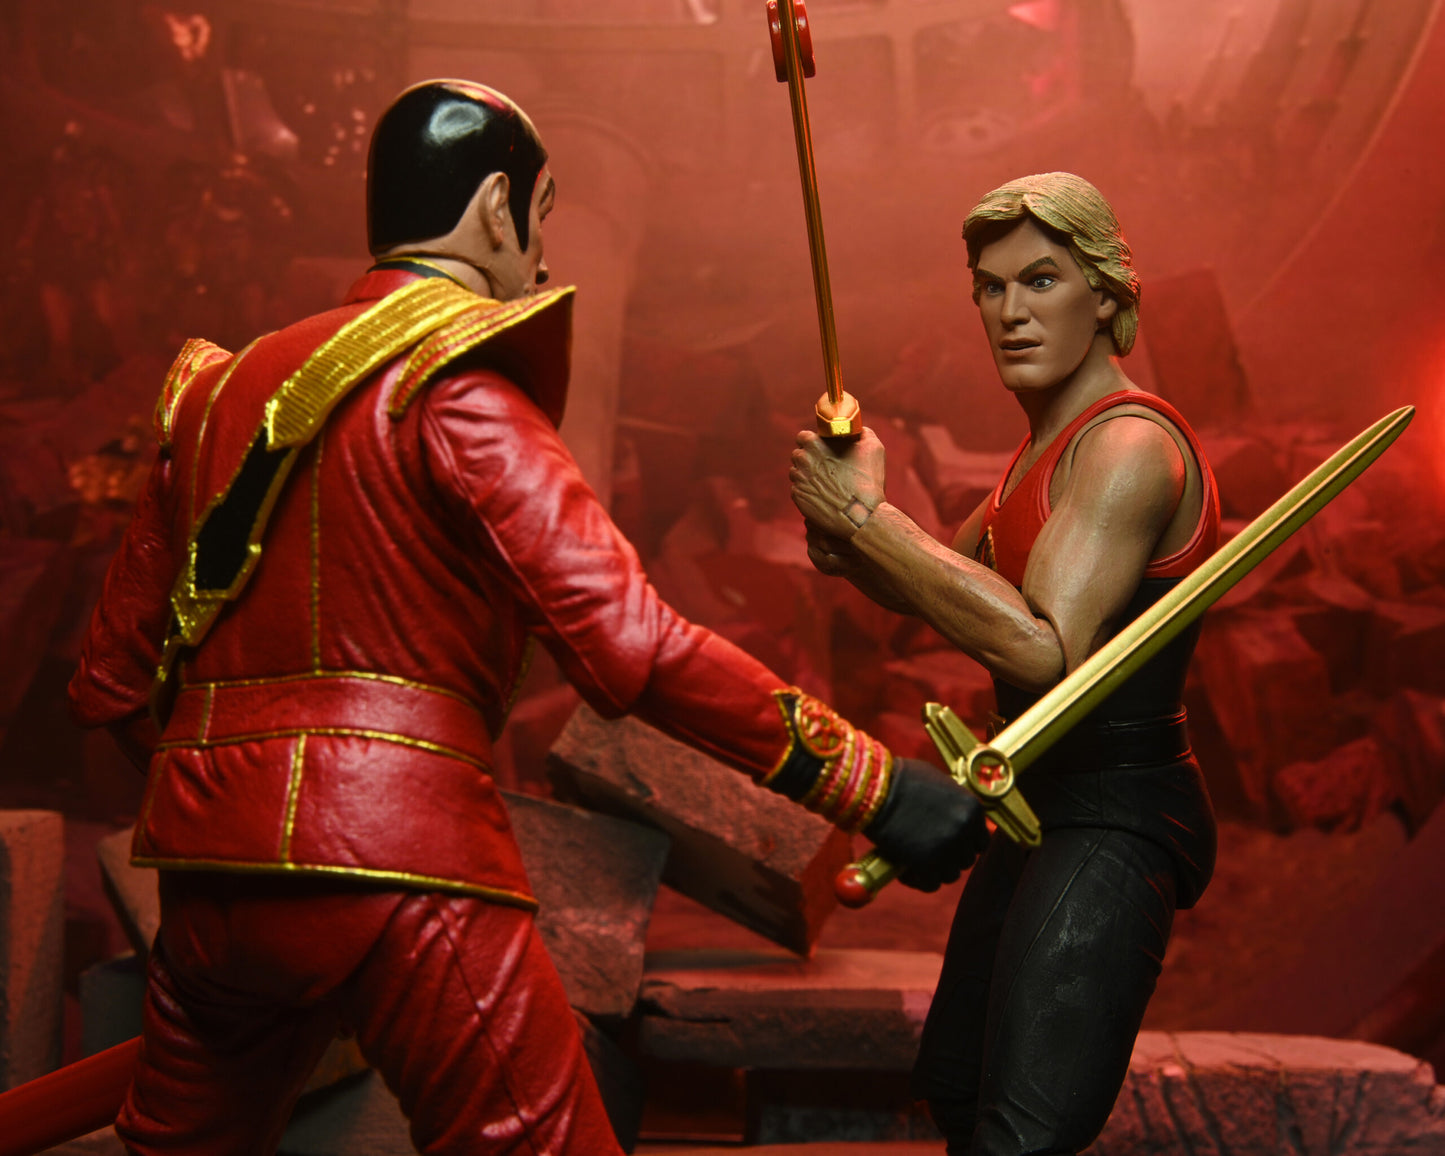 Flash Gordon (1980)

7” Scale Action Figure – Ultimate Flash Gordon (Final Battle)